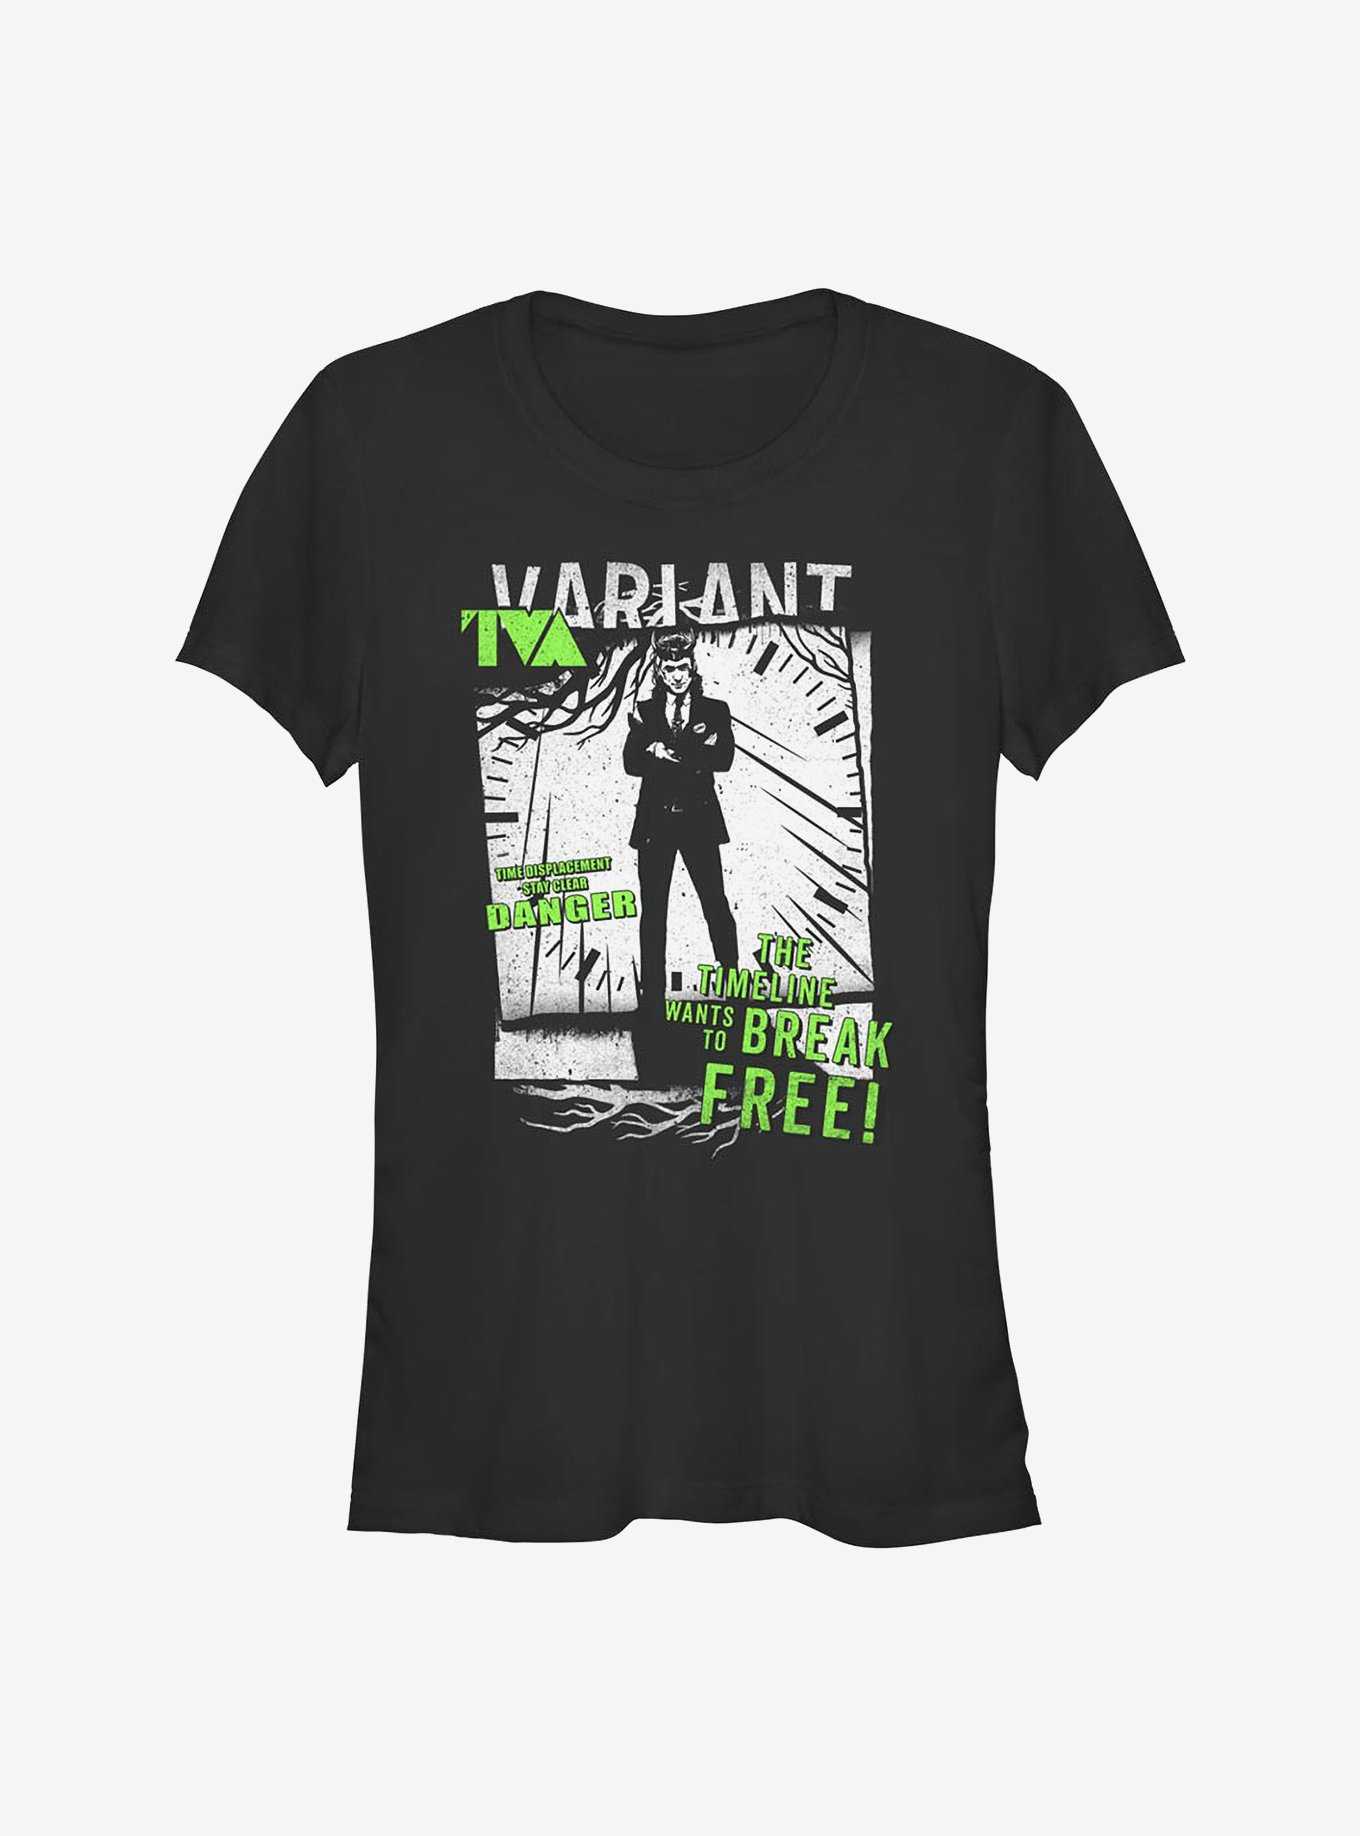 Marvel Loki TVA Displacement Girls T-Shirt, , hi-res